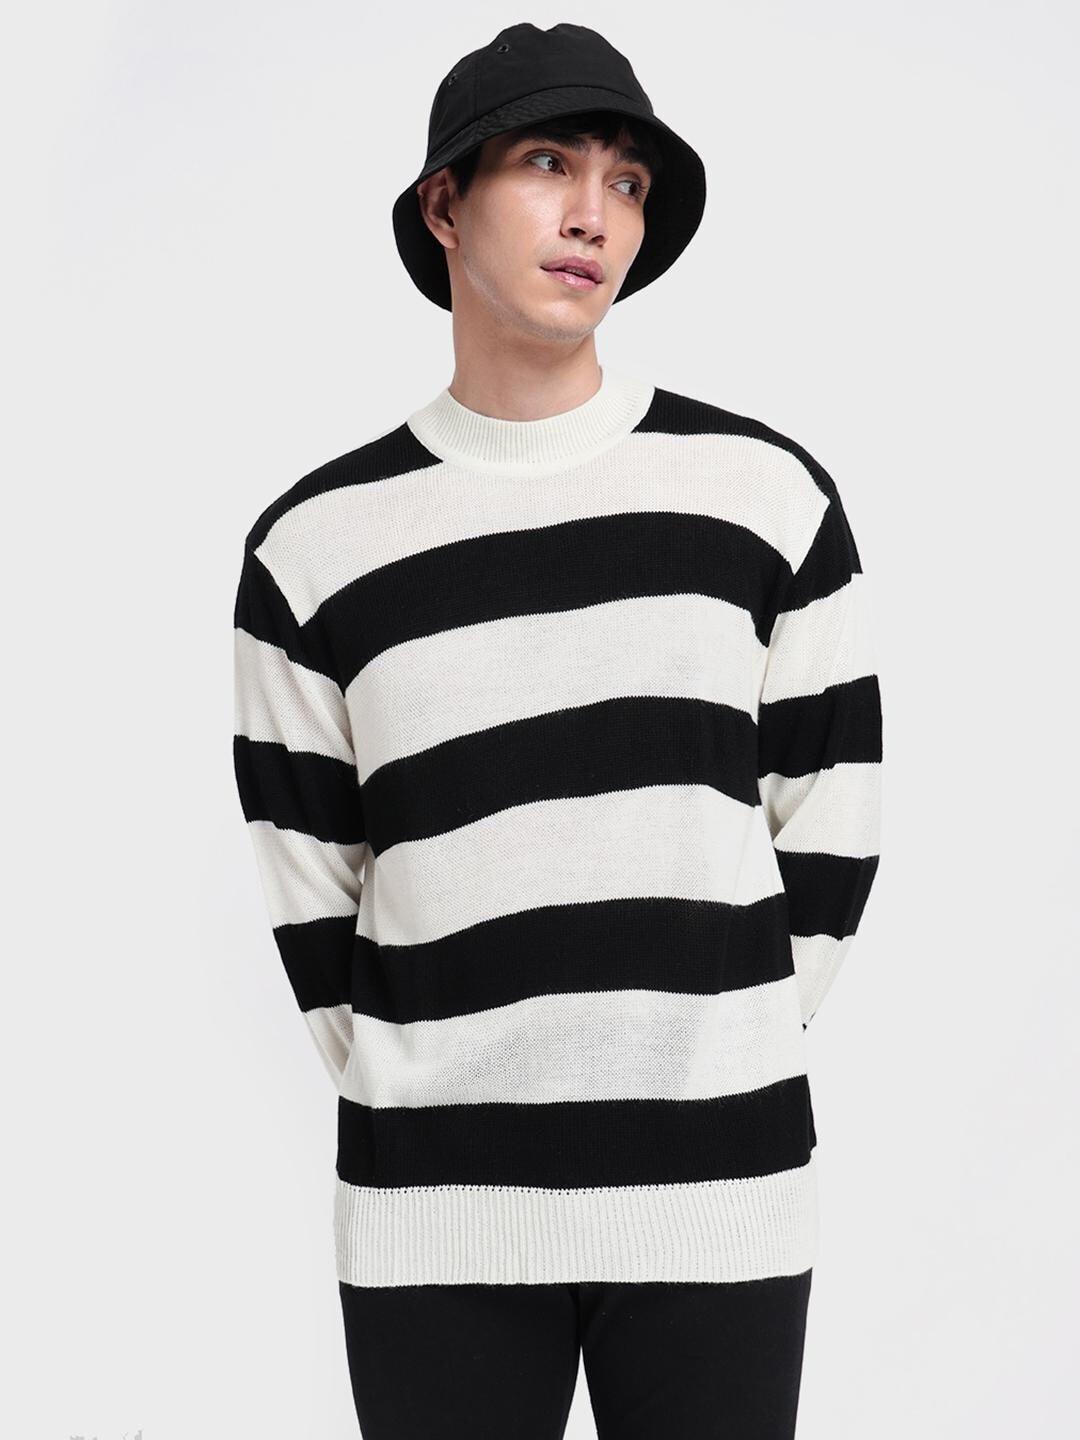 bewakoof-men-black-&-white-striped-oversized-sweater